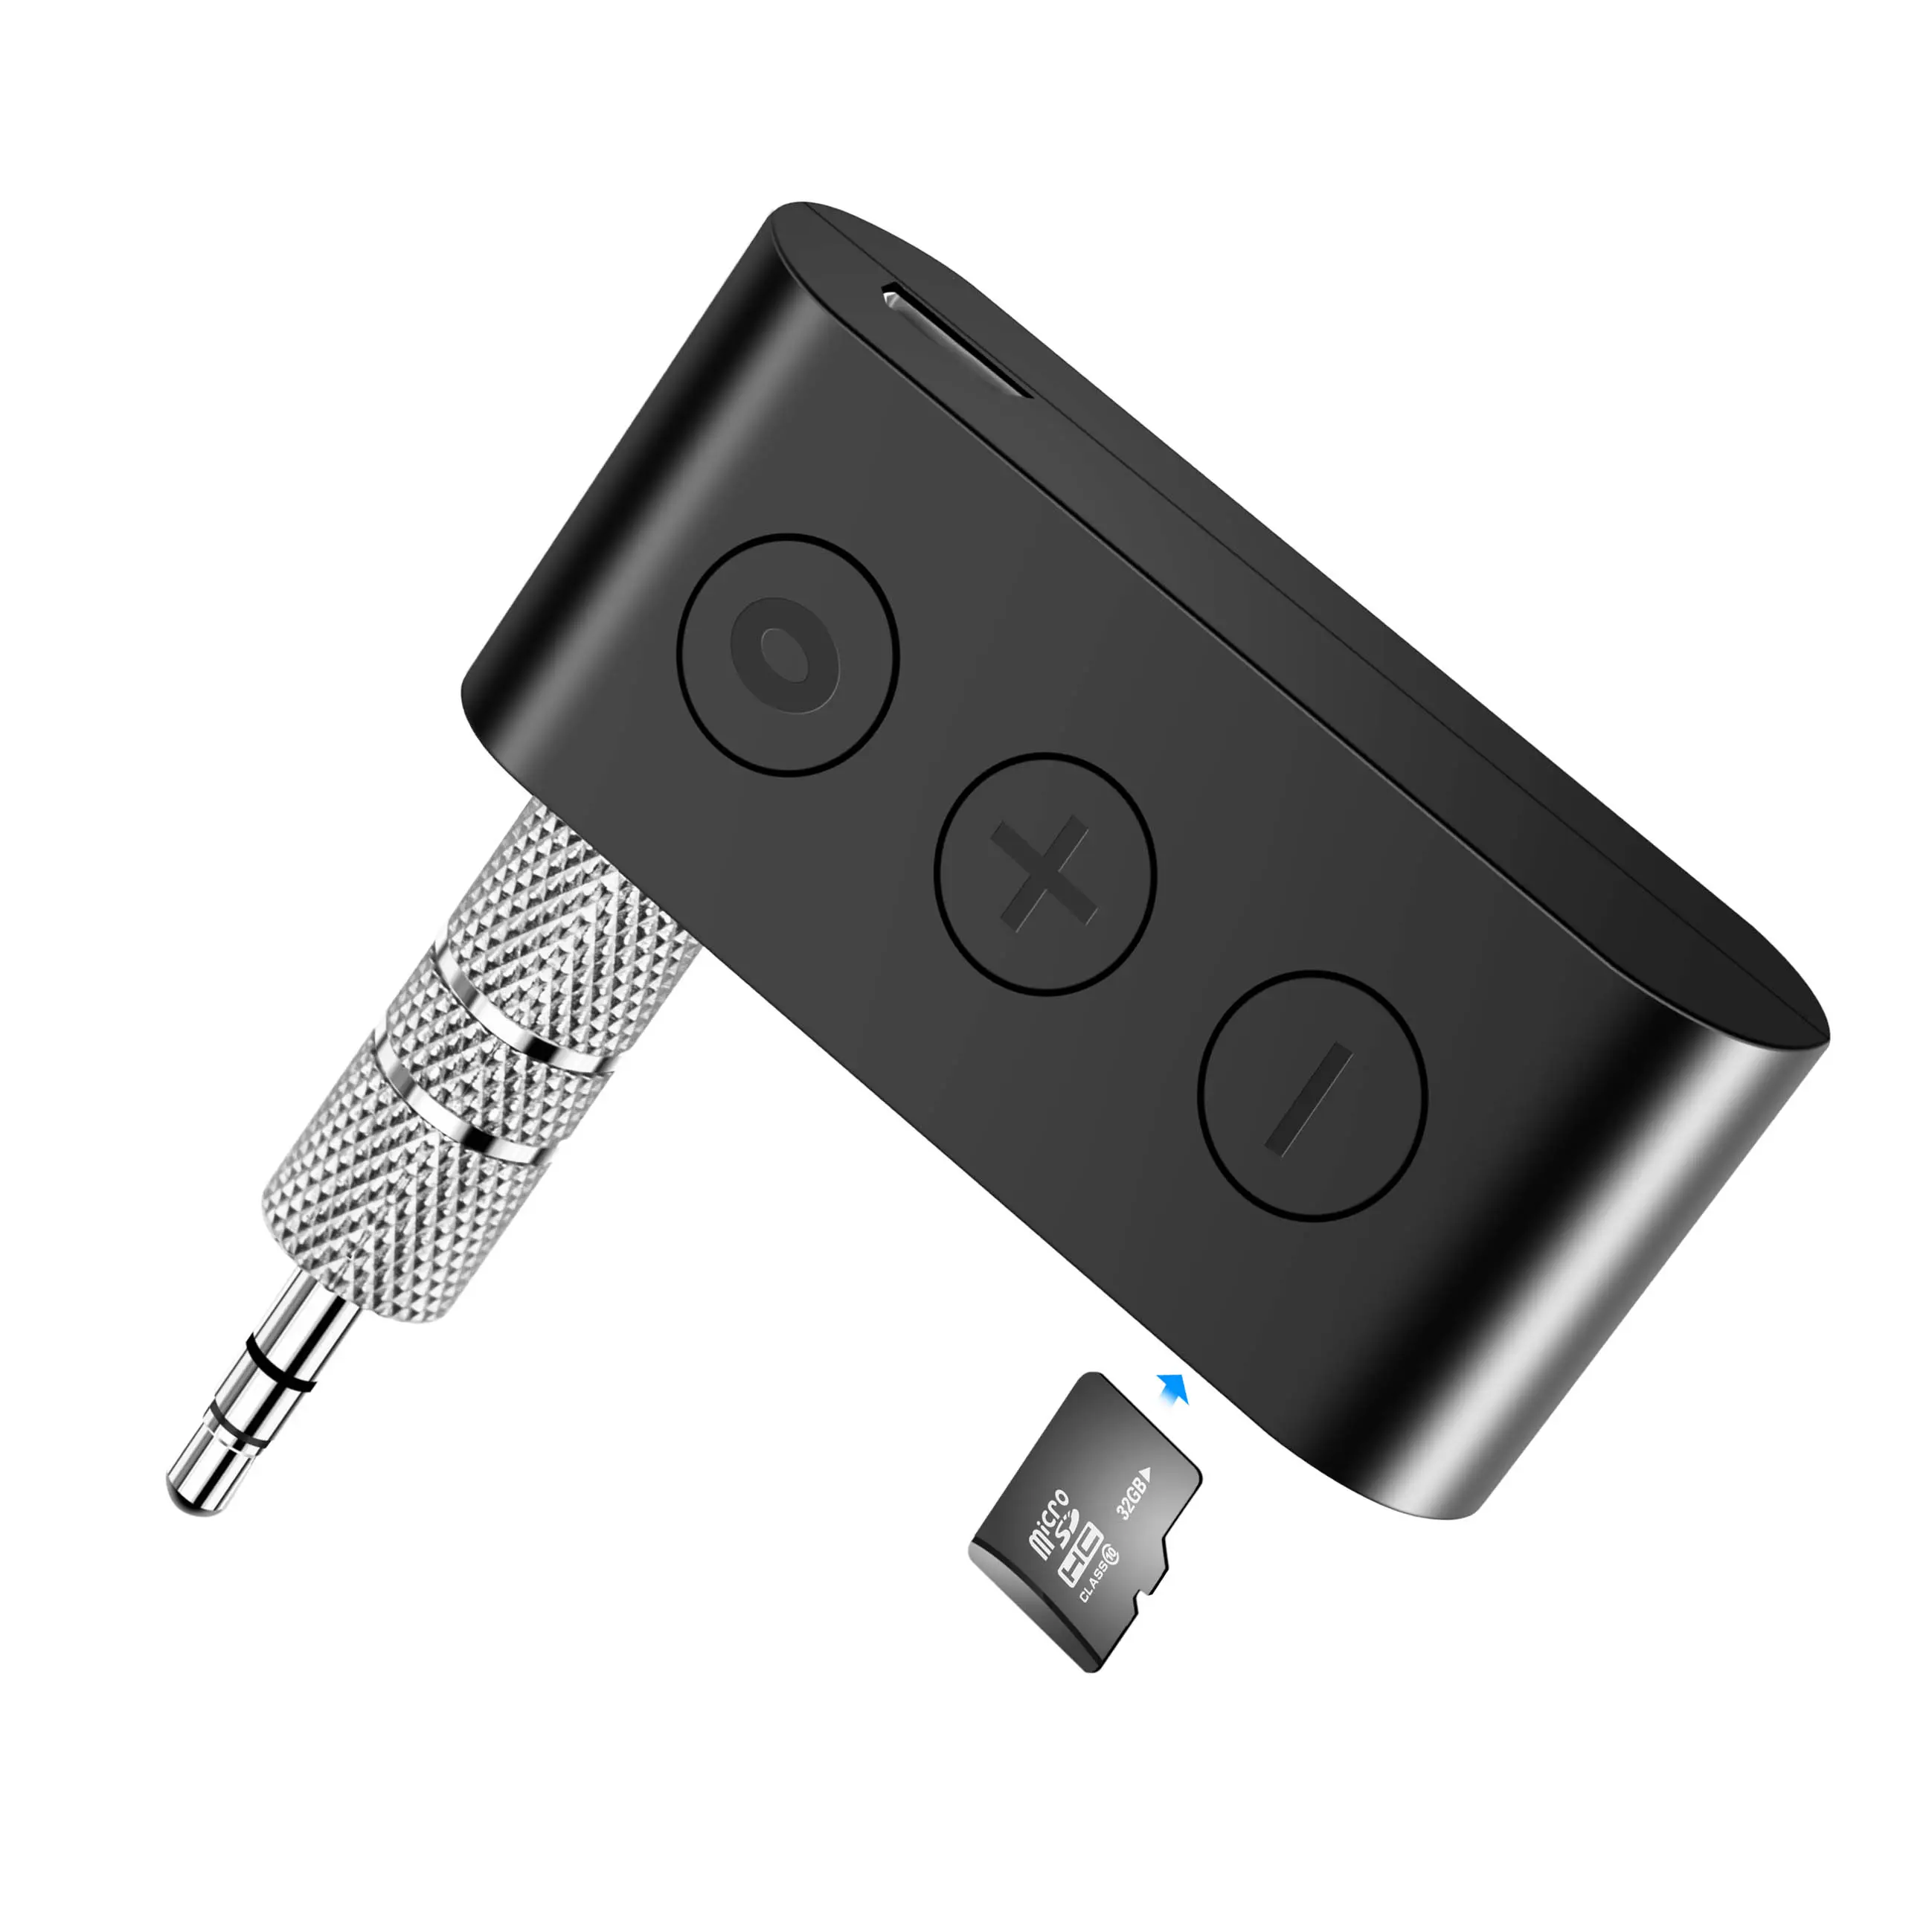 Bluetooth Mobil Aux Adaptor BR03 AUX Streaming A2DP Kit dengan Musik Speaker Nirkabel Bluetooth Receiver 3.5Mm Jack Audio